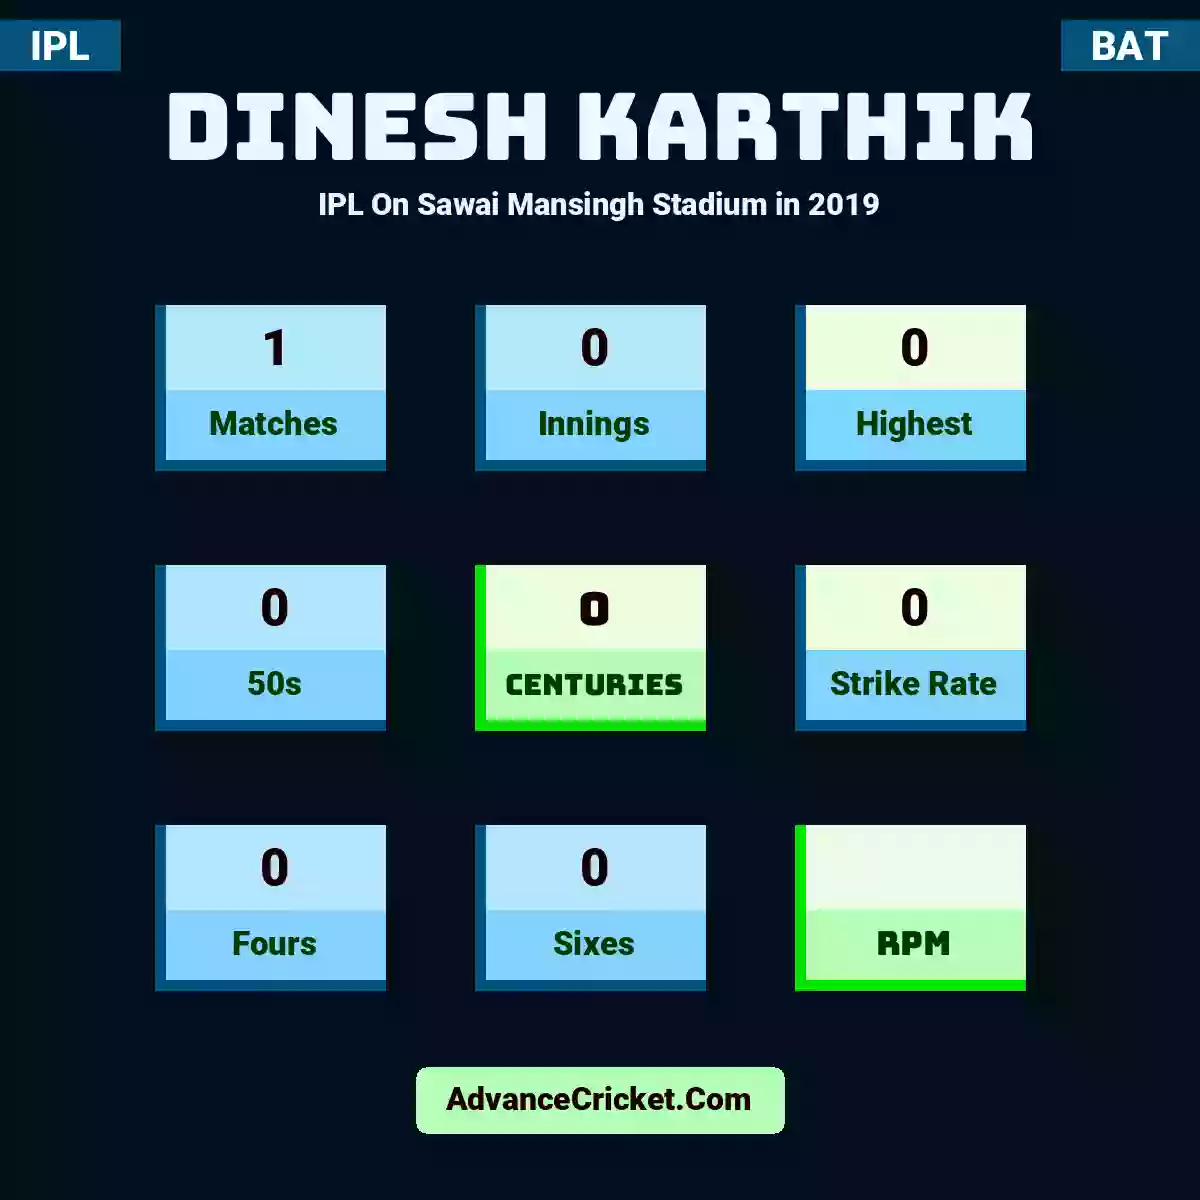 Dinesh Karthik IPL  On Sawai Mansingh Stadium in 2019, Dinesh Karthik played 1 matches, scored 0 runs as highest, 0 half-centuries, and 0 centuries, with a strike rate of 0. D.Karthik hit 0 fours and 0 sixes.